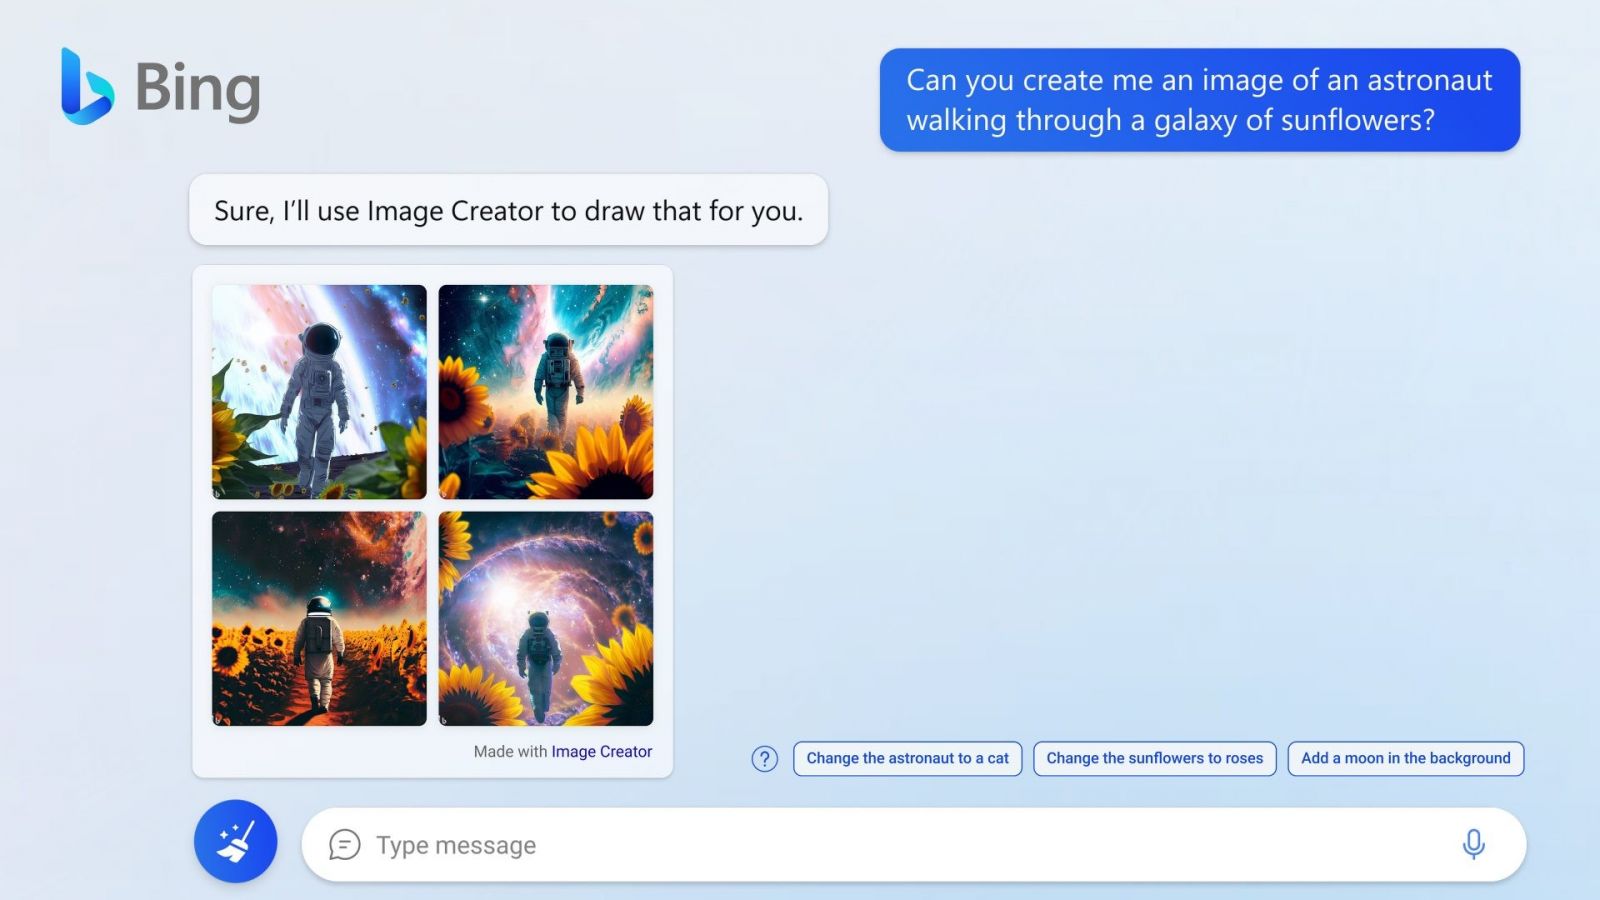 Bing Chat ของ Microsoft เพิ่ม Bing Image Creator สร้างงานศิลปะด้วย AI